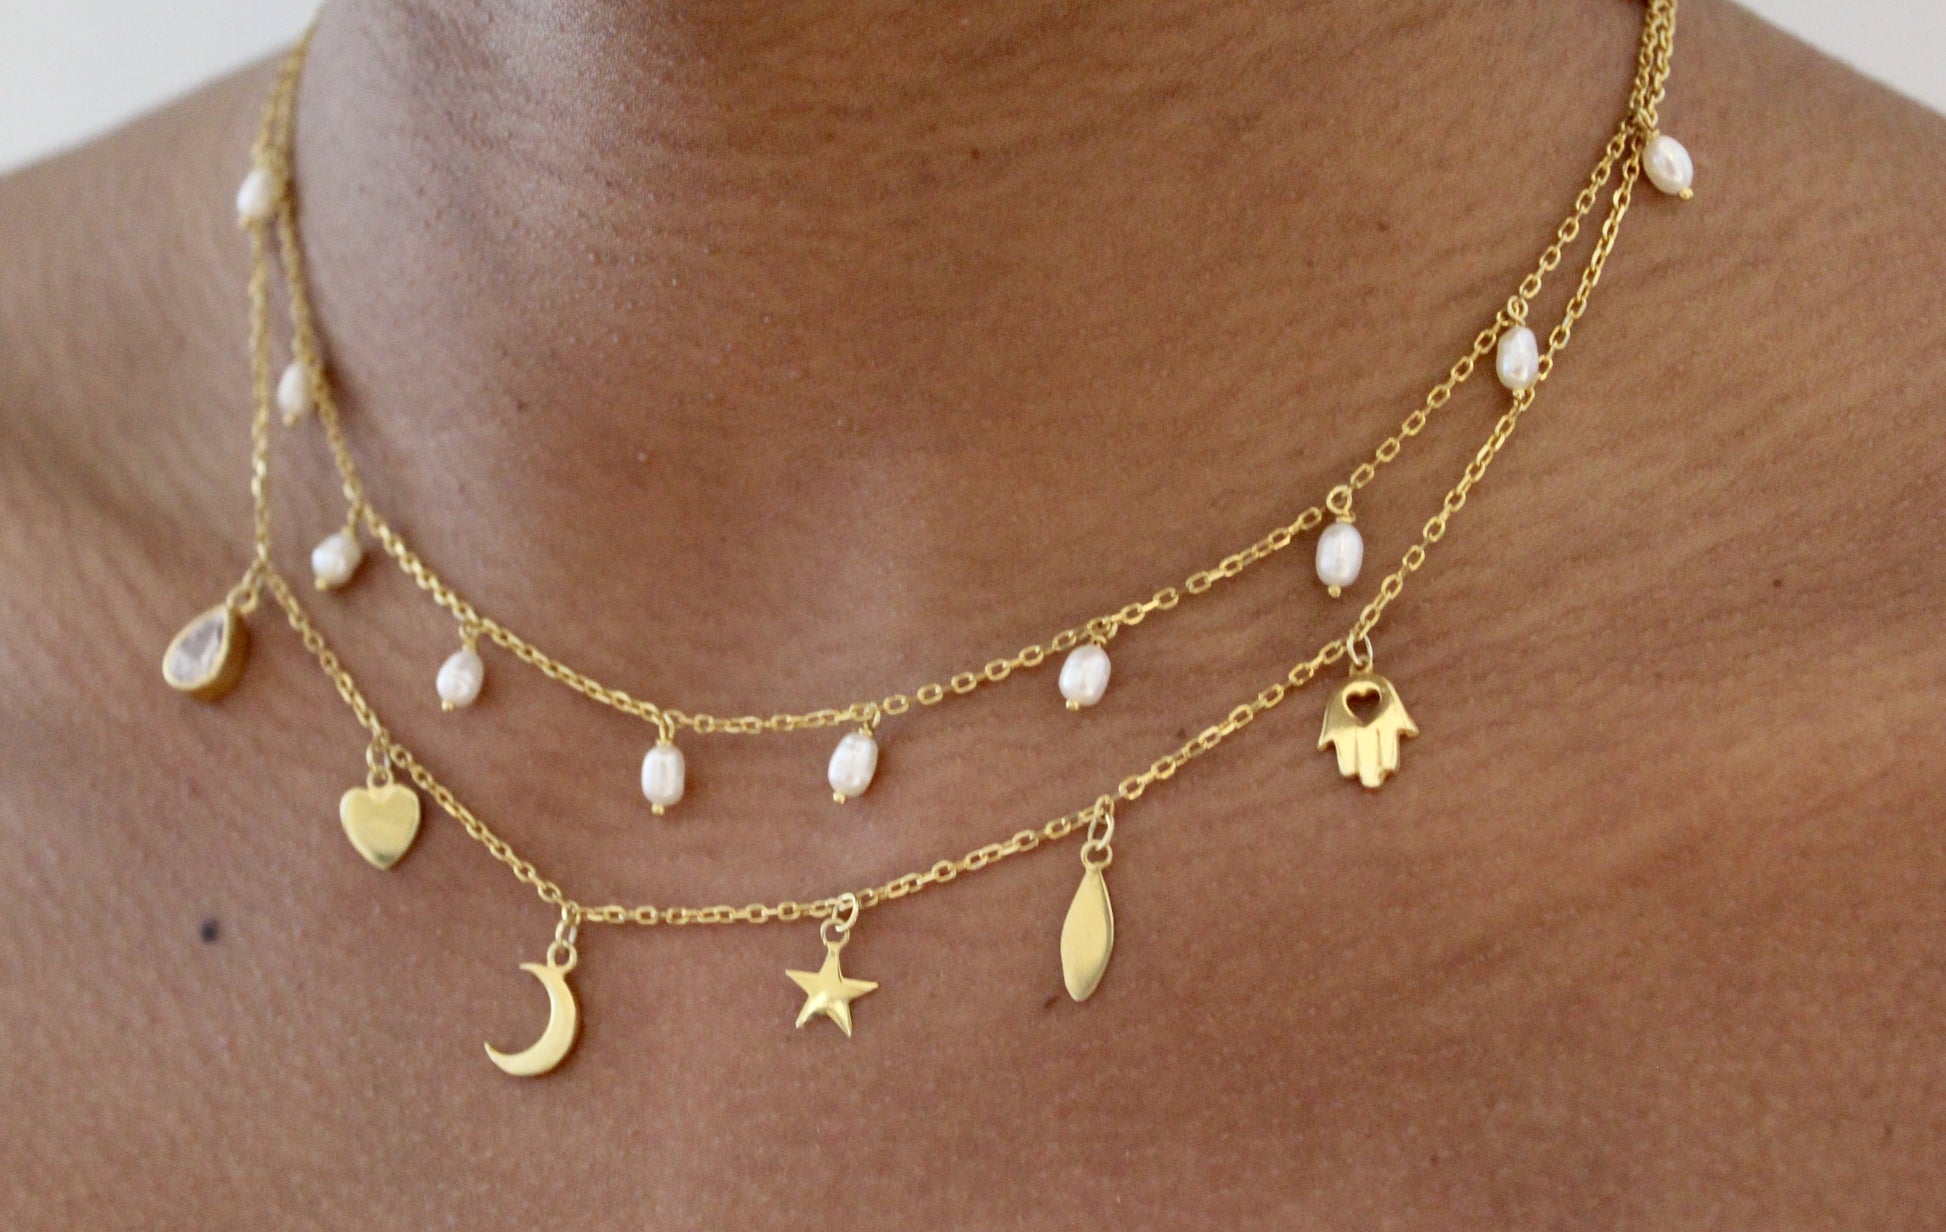 The quartz Gemstone Pendant Necklace - you by me.